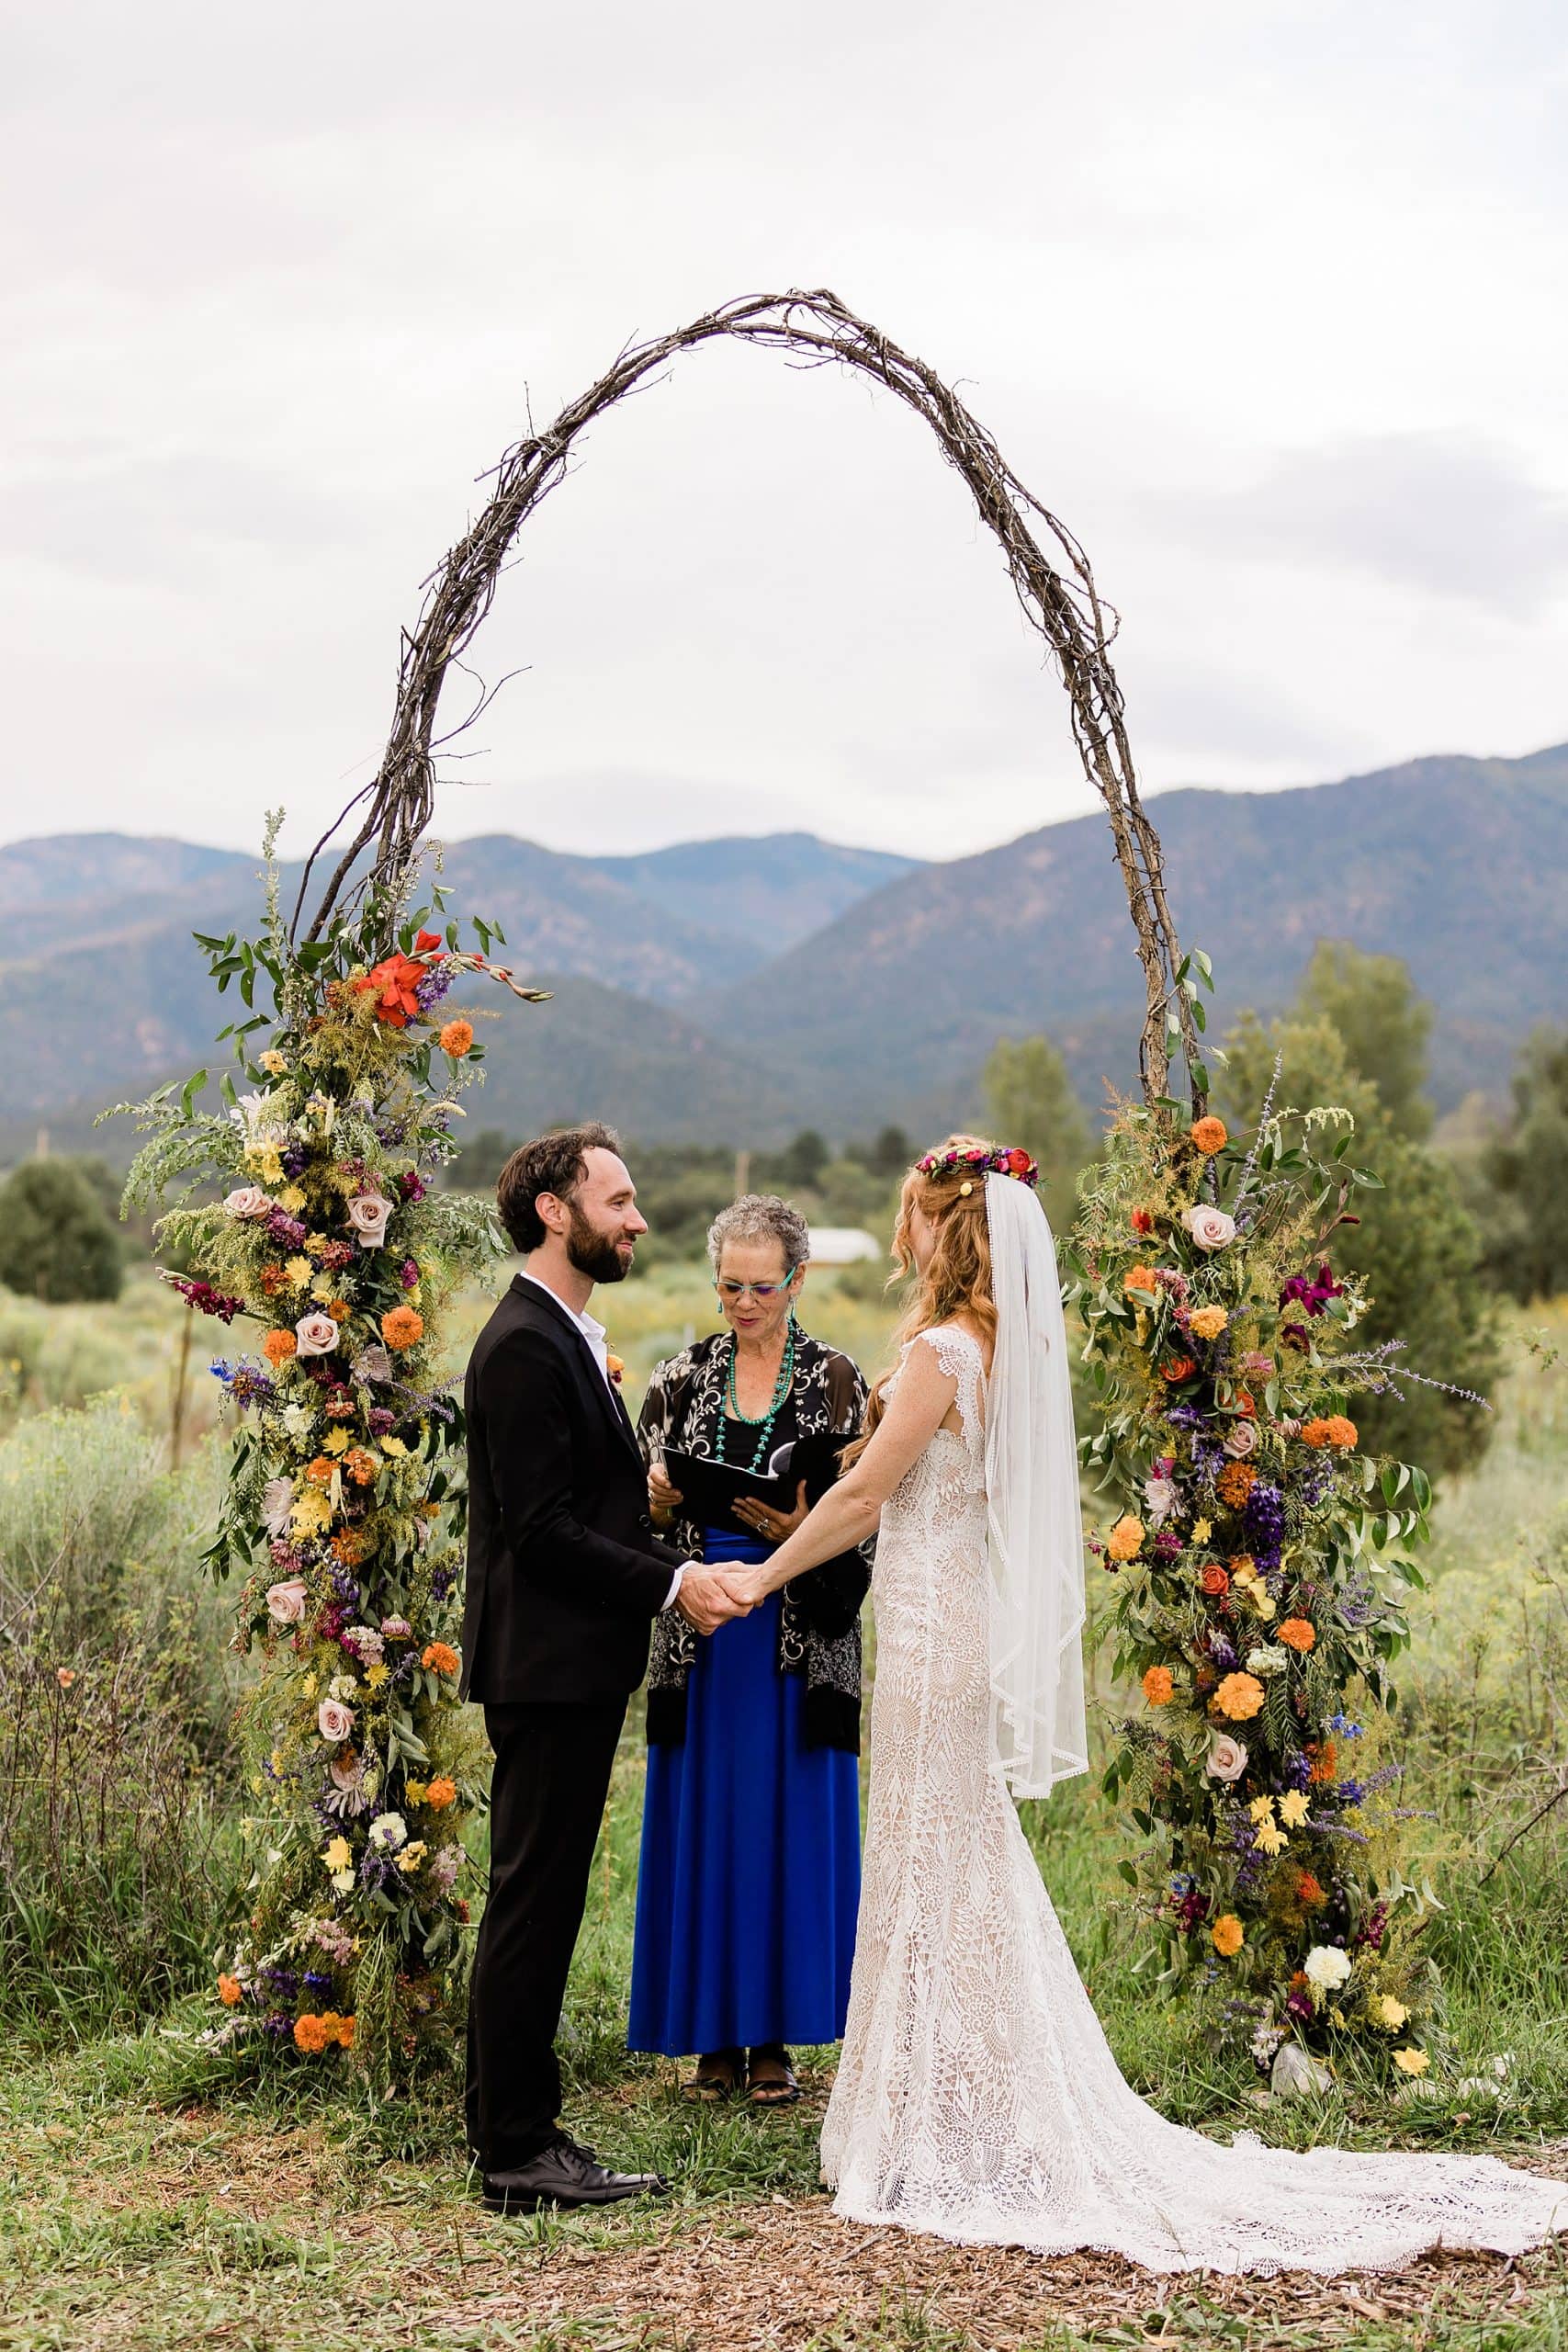 A bride and groom say their vows at a Goji Farm in Taos.